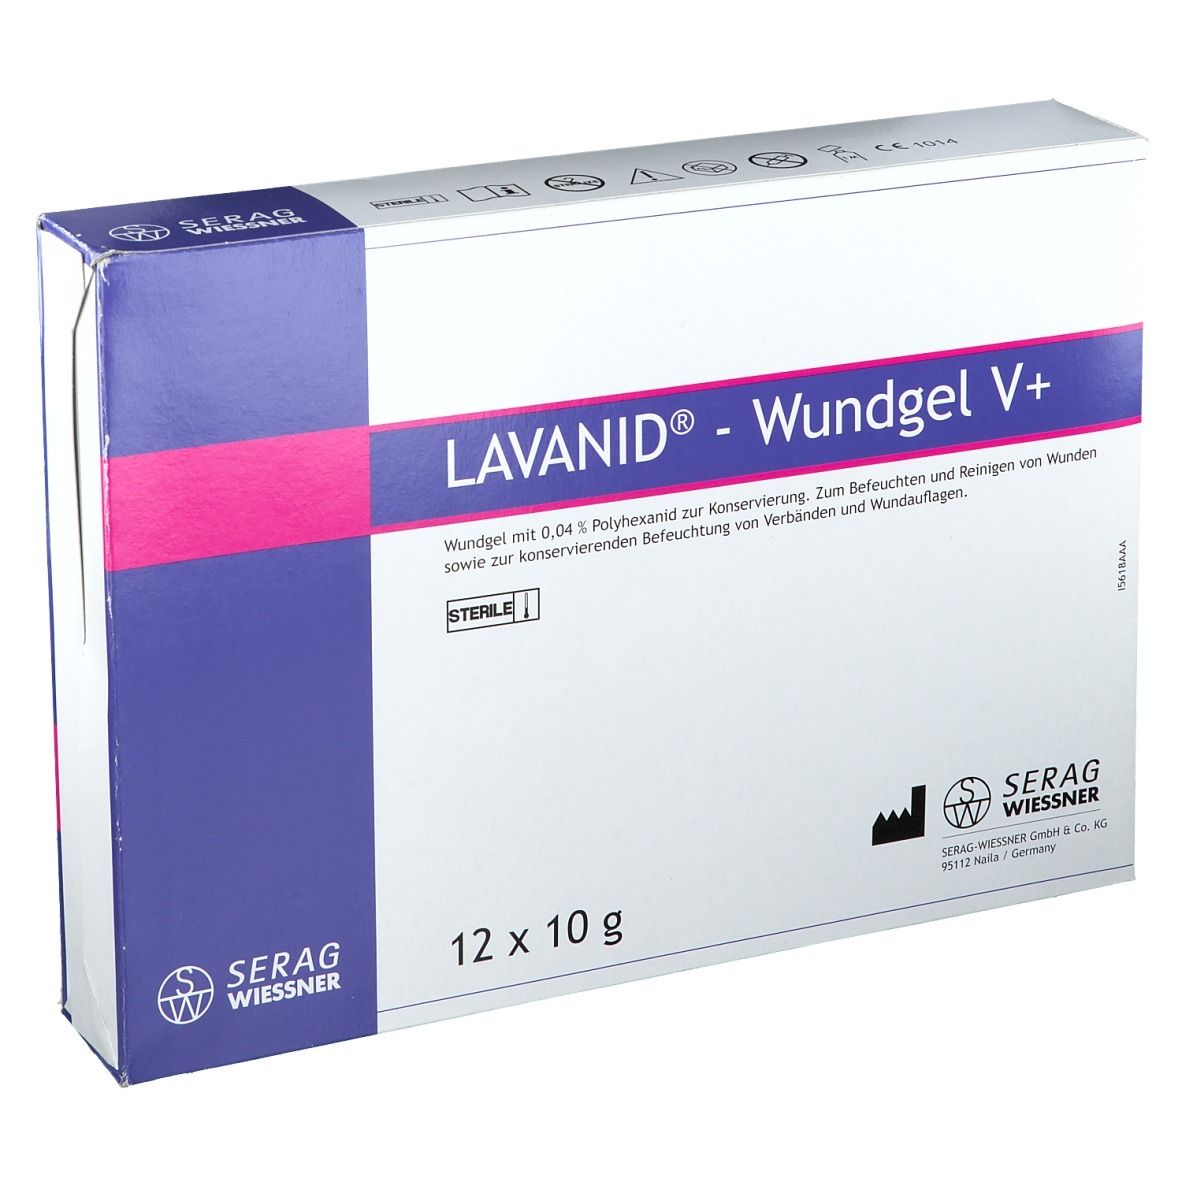 LAVANID®-Wundgel V+